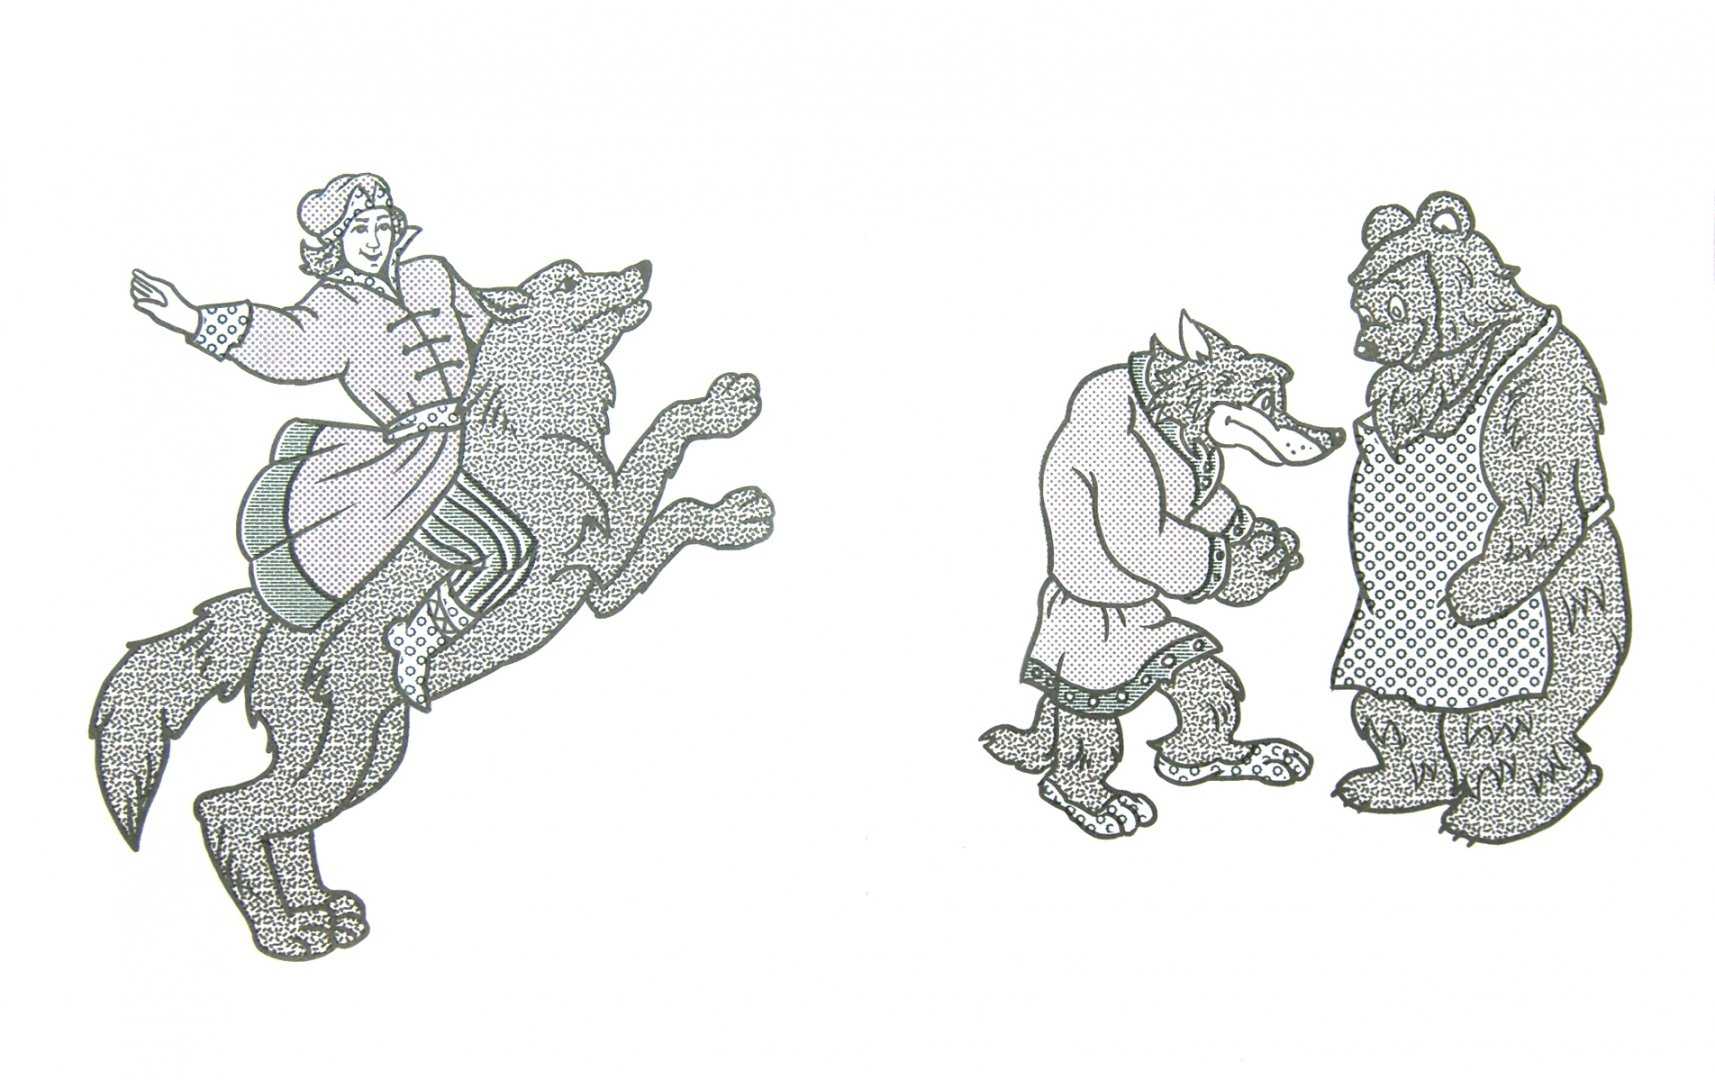 Сочинение по картине васнецова “иван-царевич на сером волке”